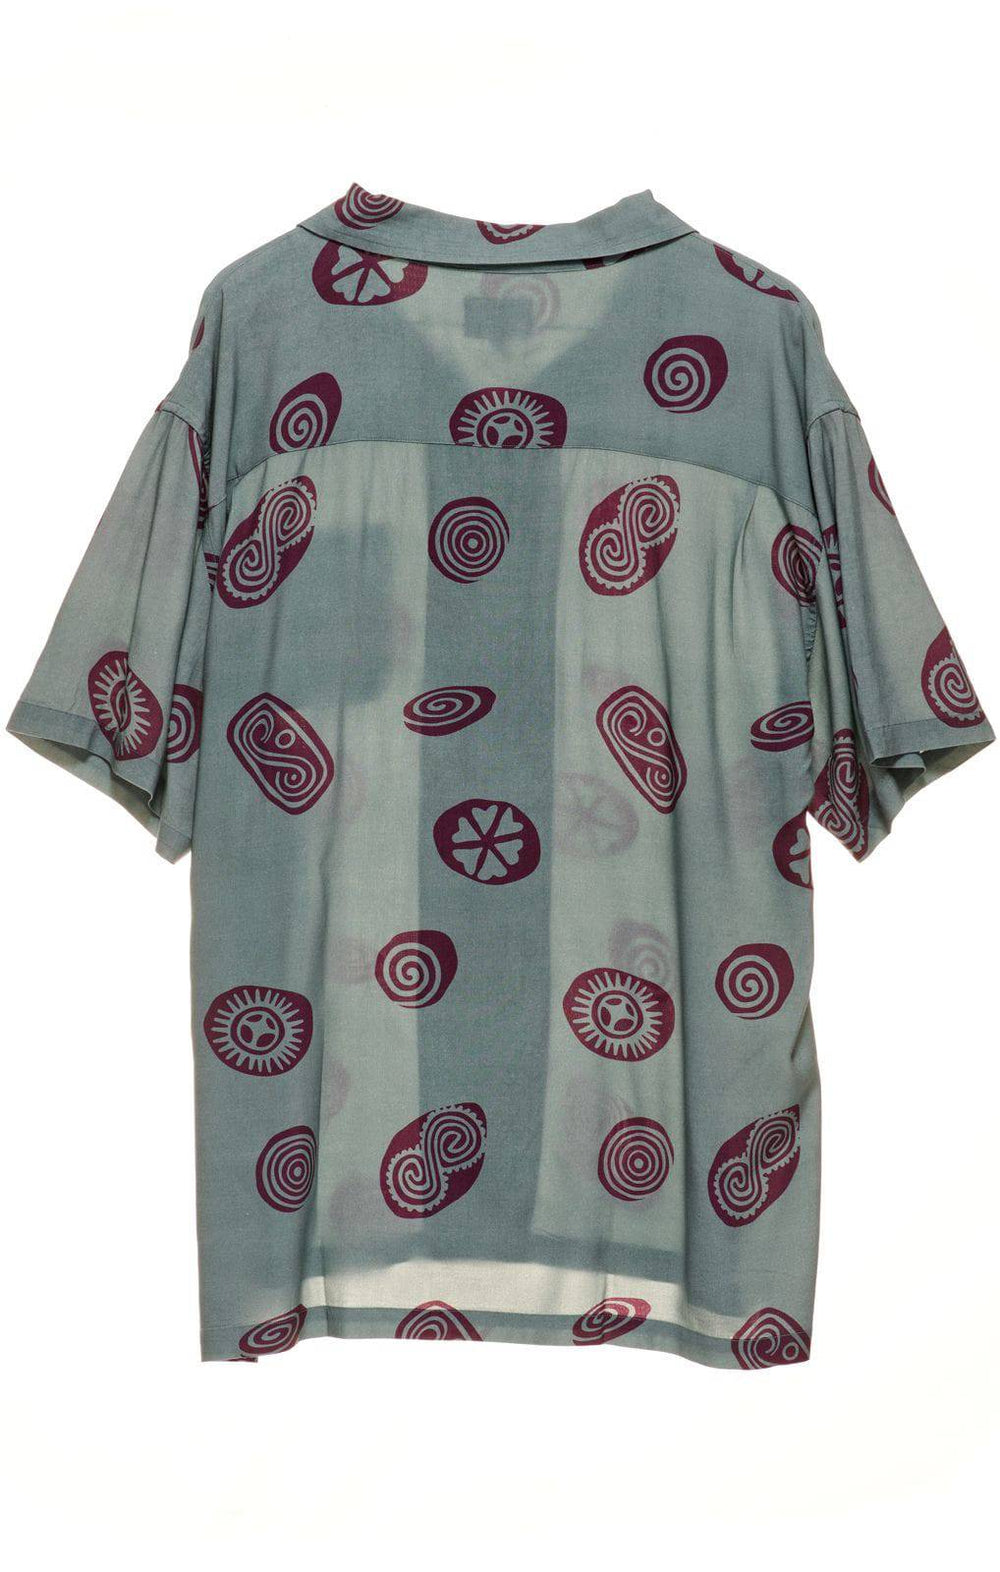 Icon Pattern SS Shirt - Chillis & More NZ